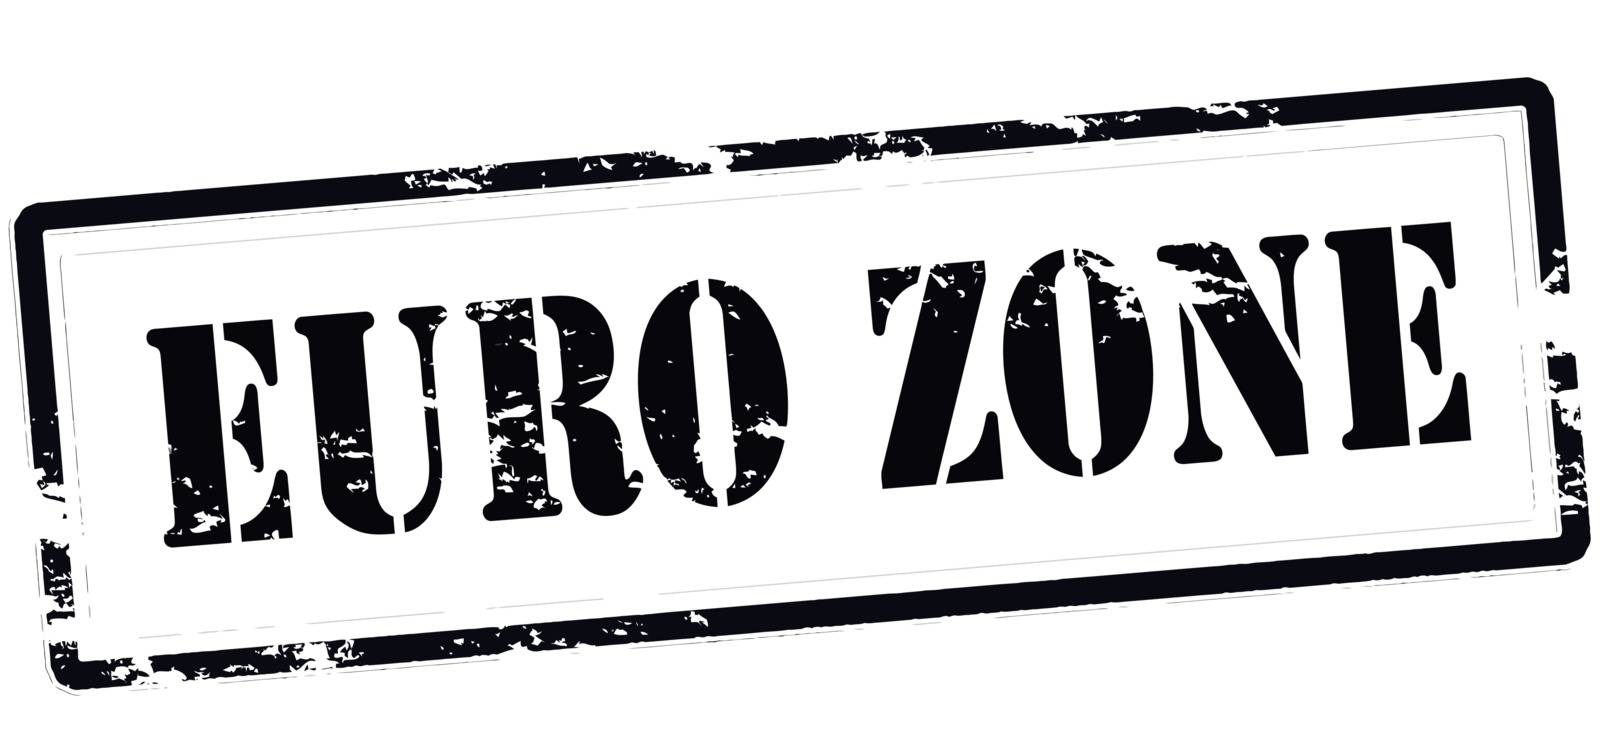 Euro zone by carmenbobo